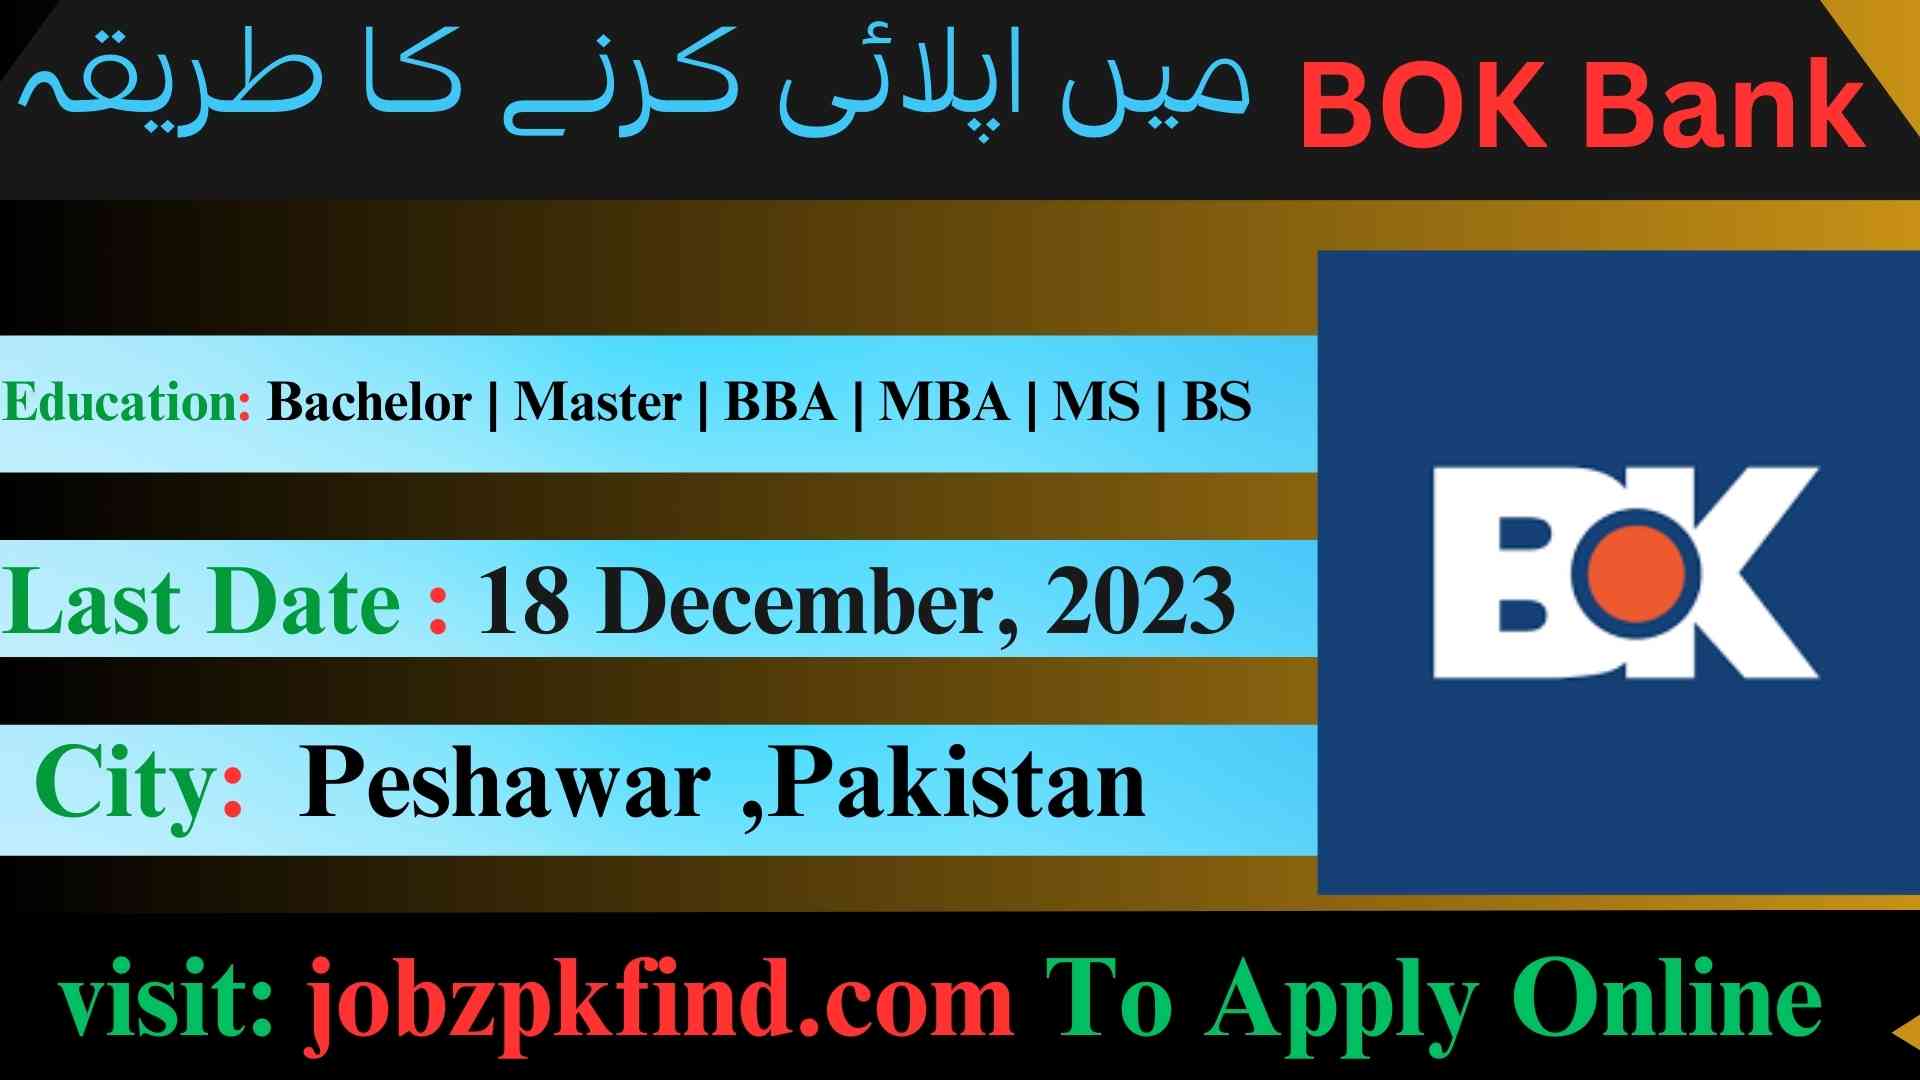 Latest The Bank of Khyber BOK Bank Jobs Peshawar 2023